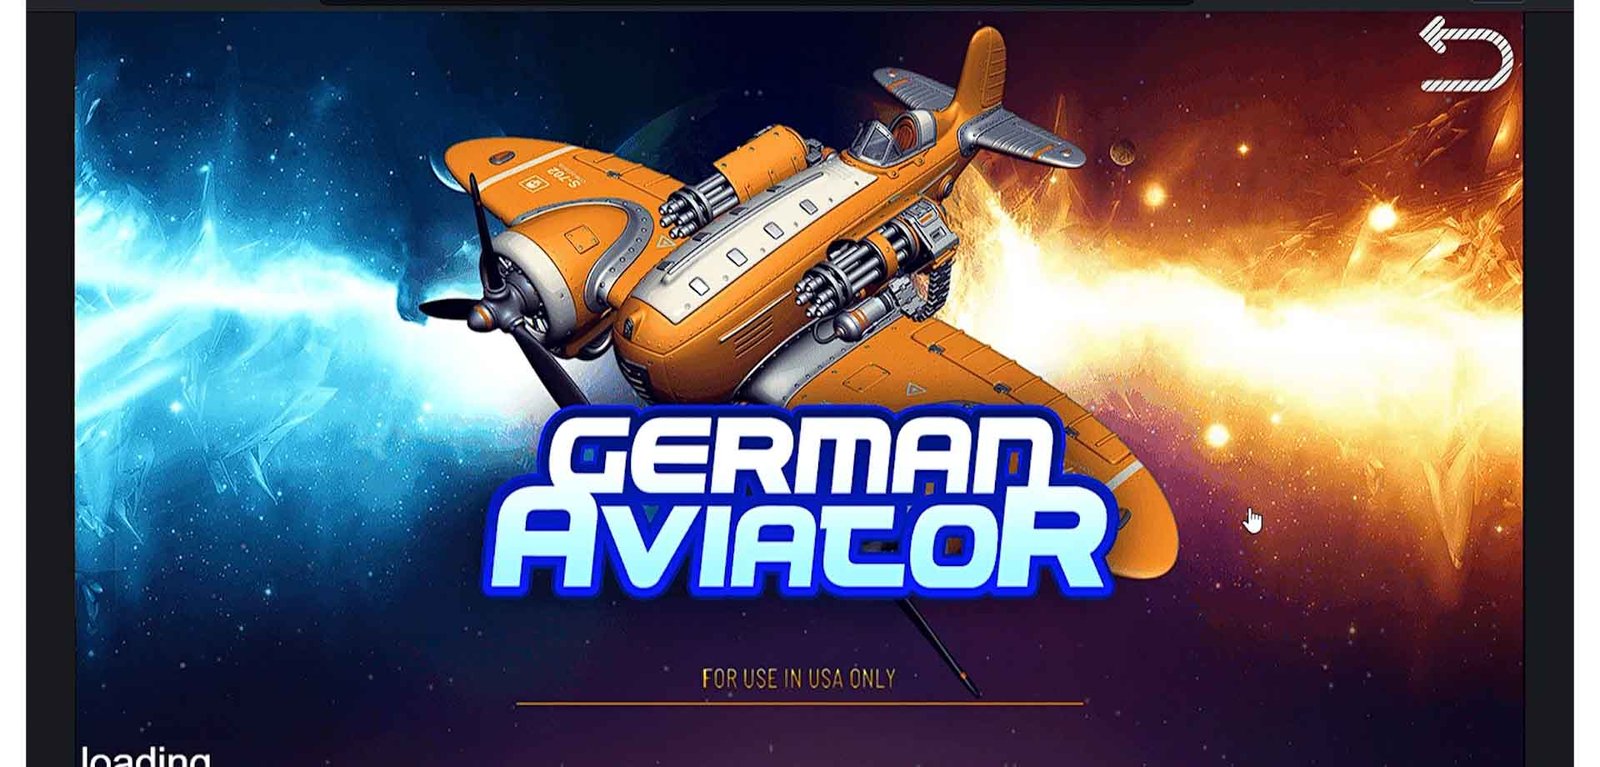 German Aviator 7